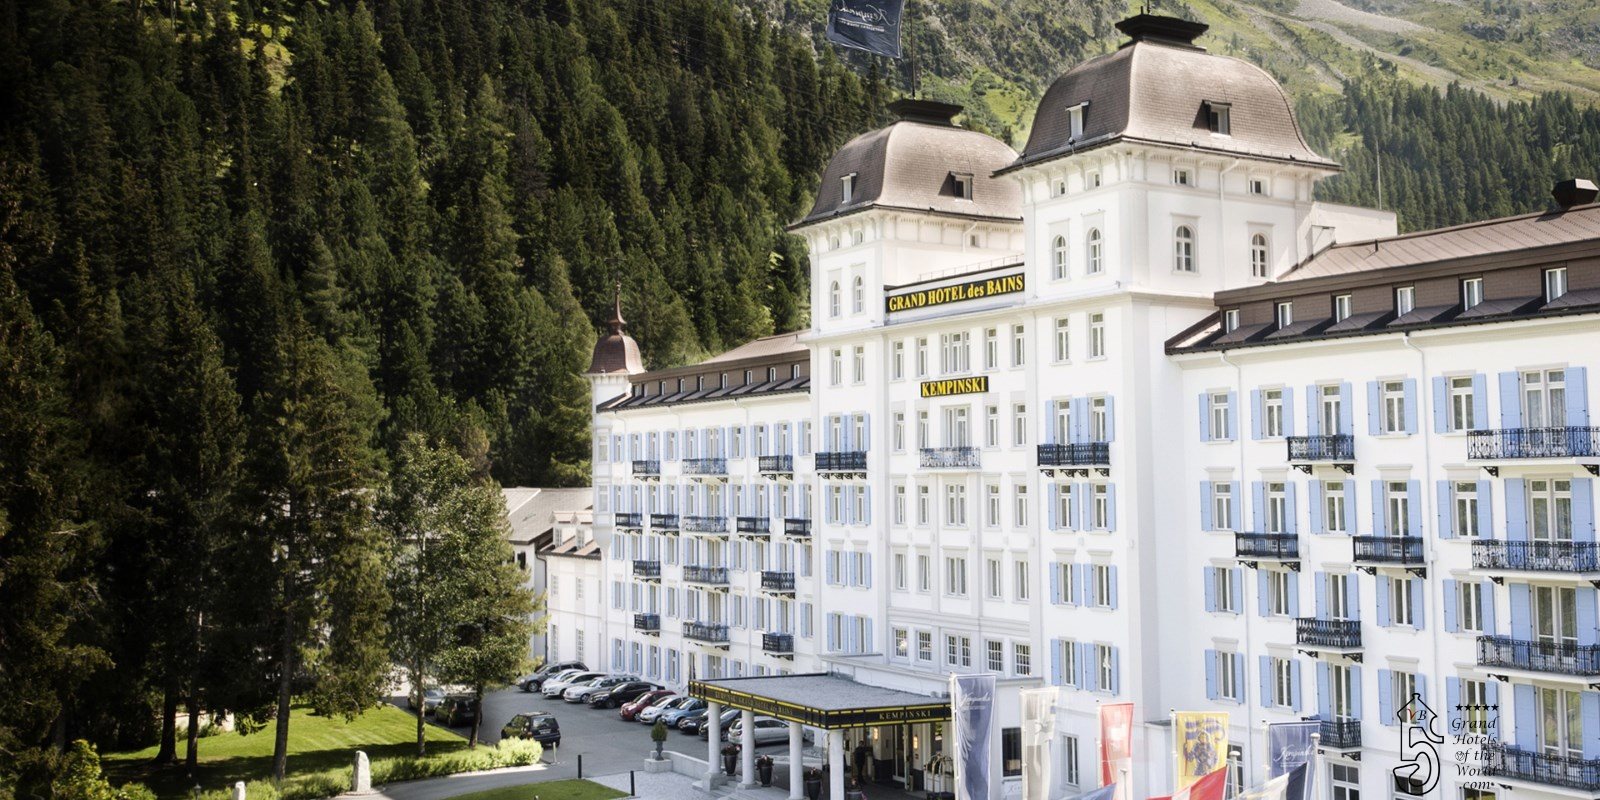 Grand Hotel des Bains in St Moritz